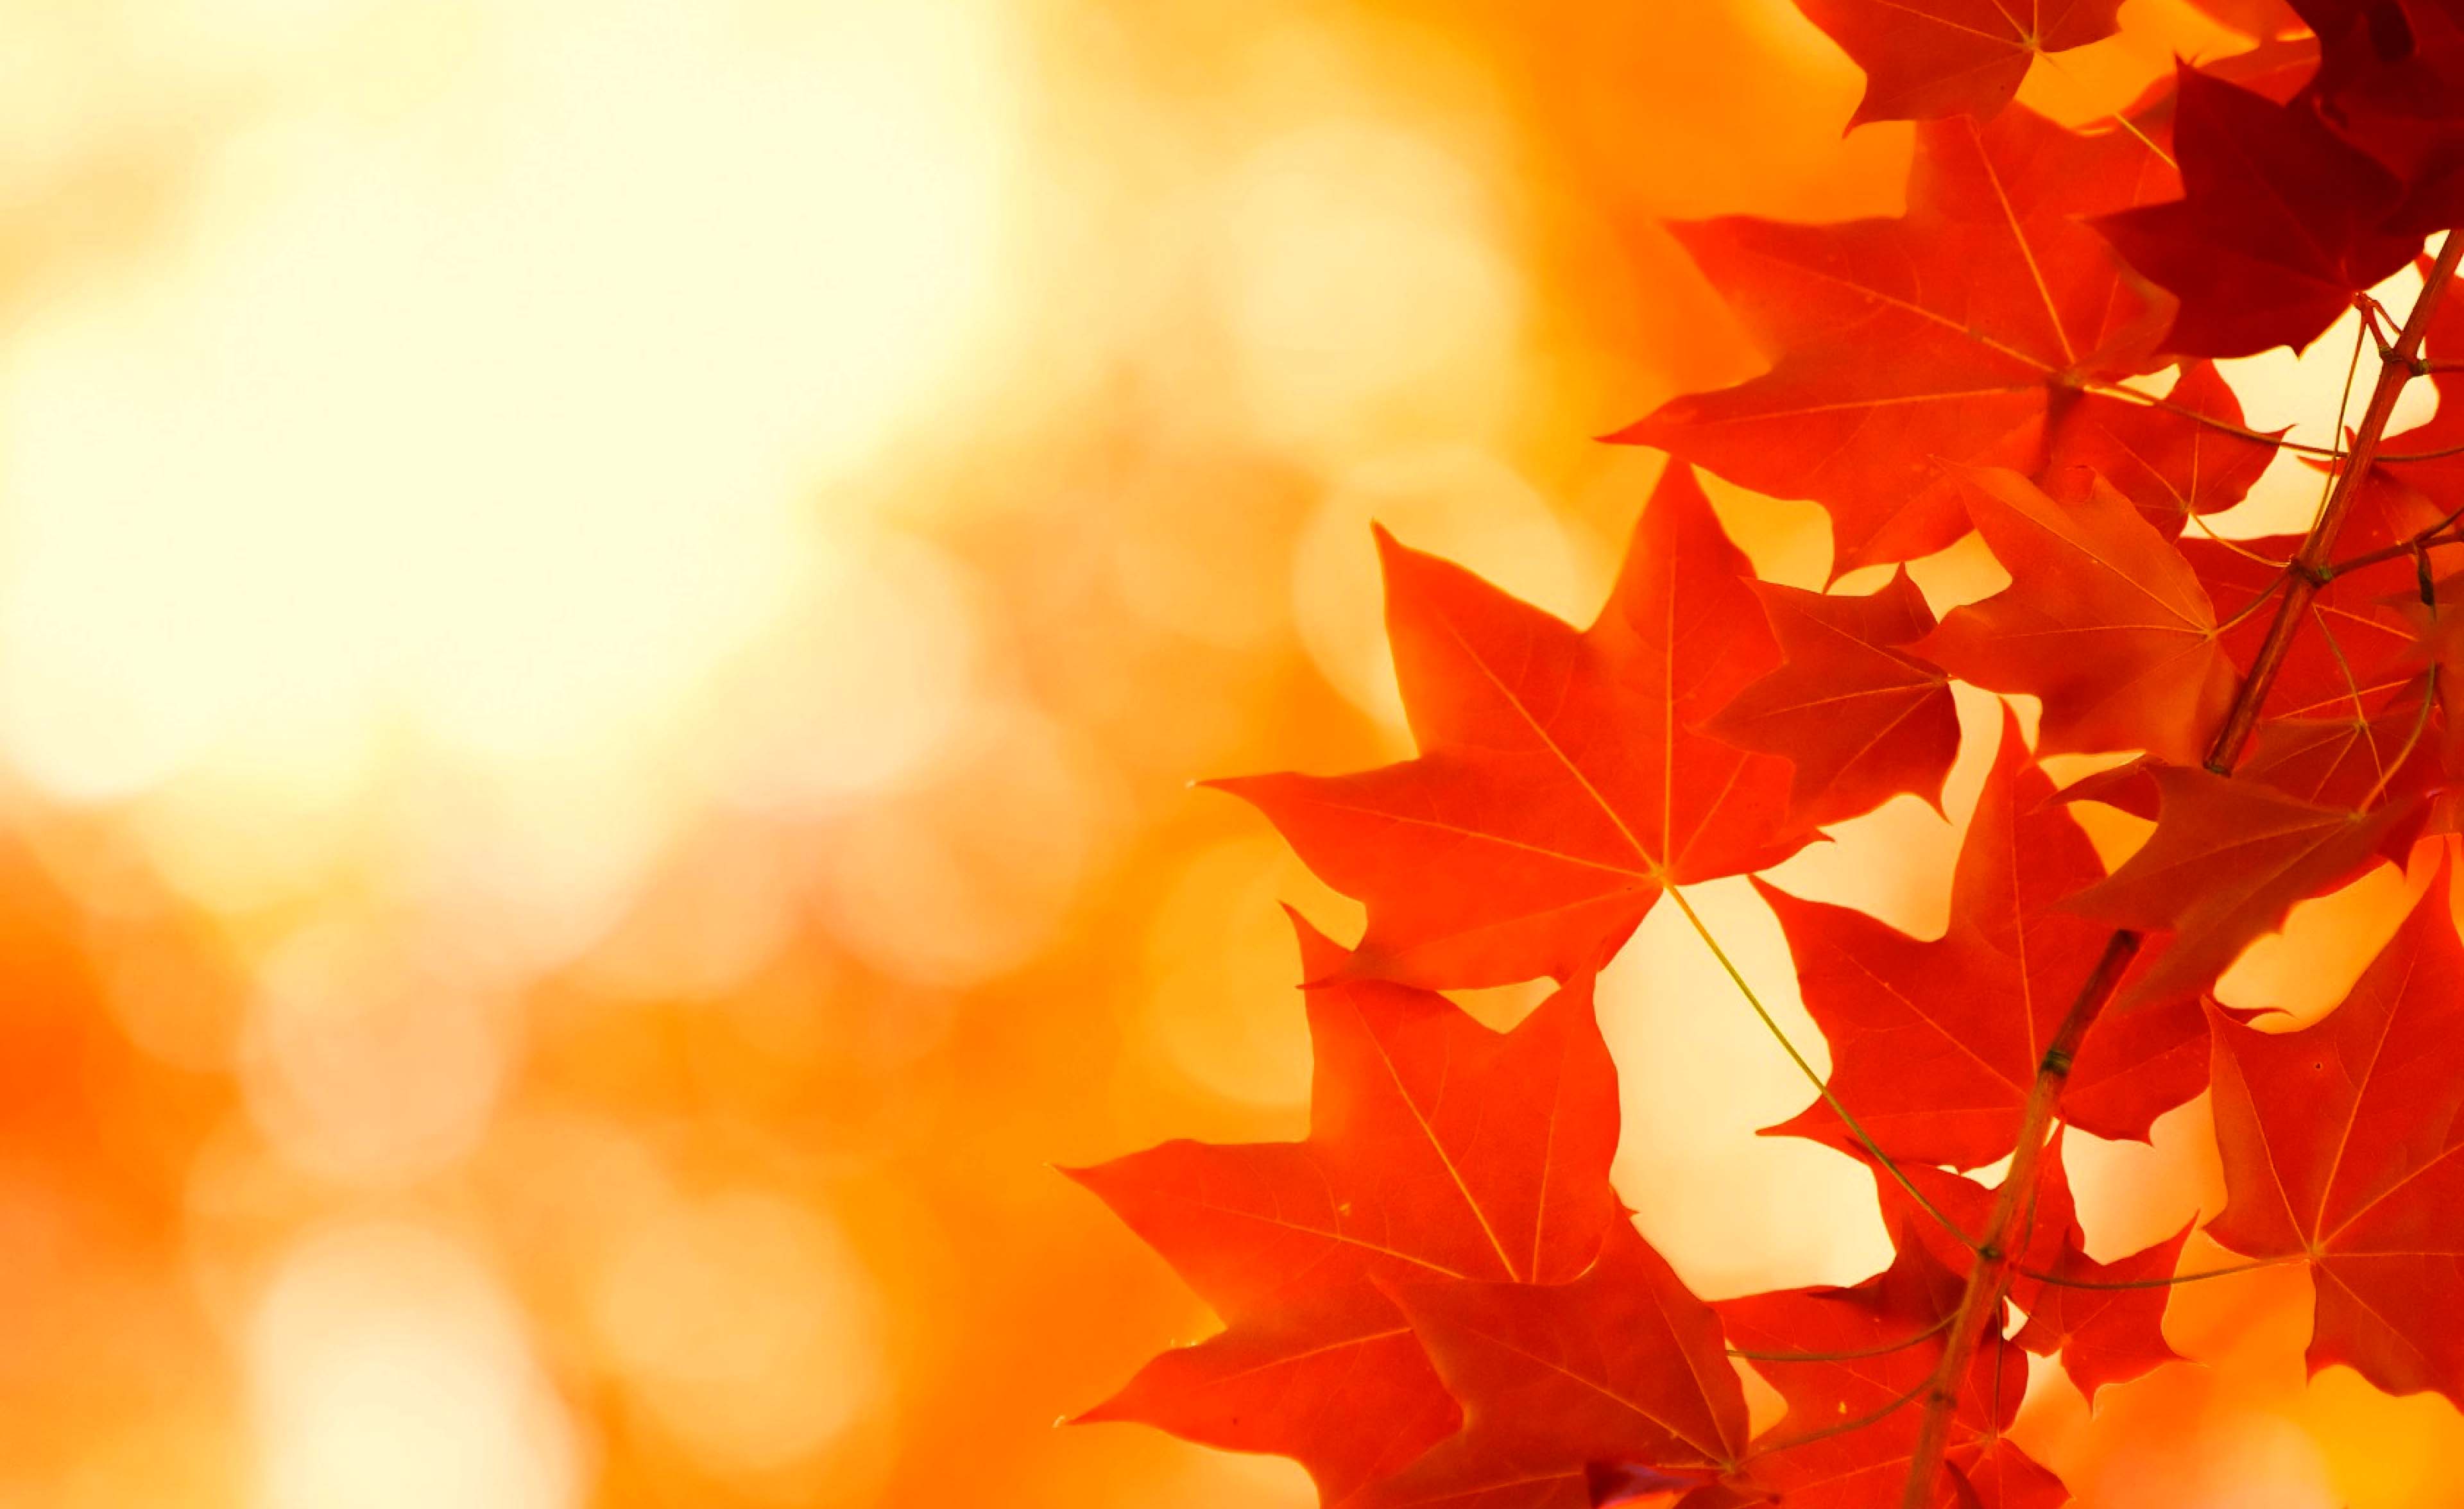 Falling Red Leaves Wallpaper A Season Of Paradox